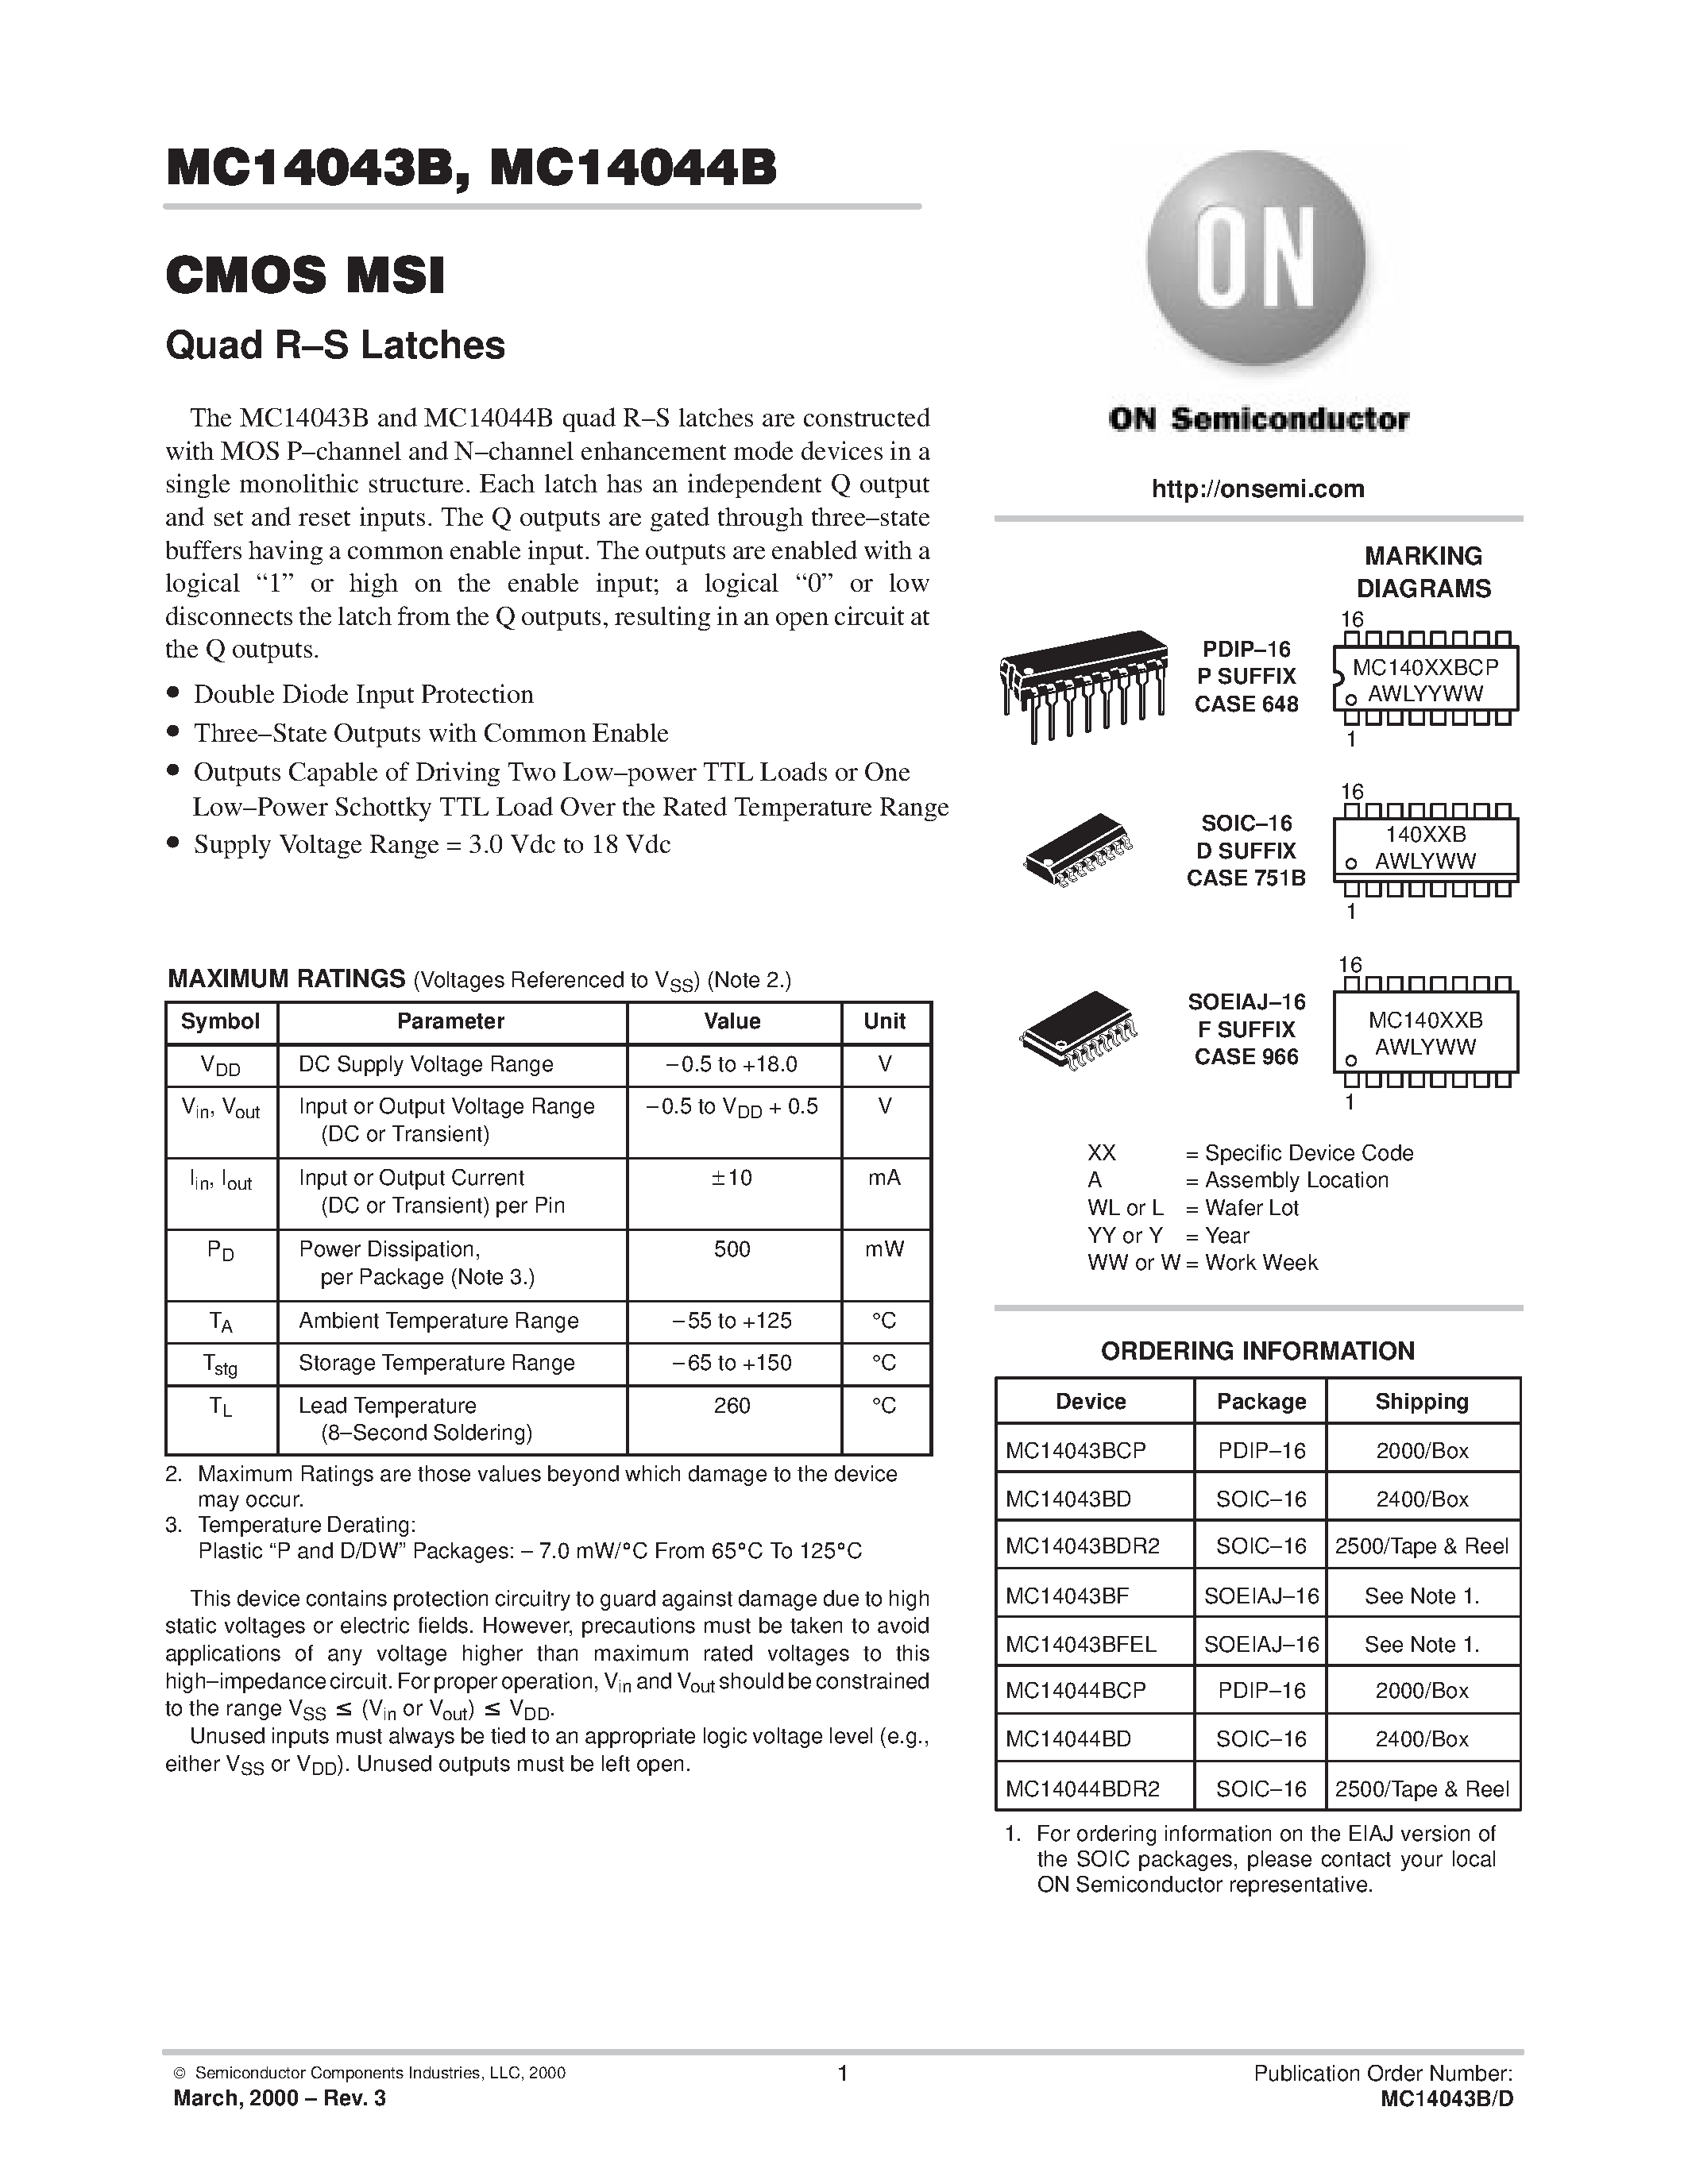 Даташит MC14044B - CMOS MSI(Quad R-S Latches) страница 1